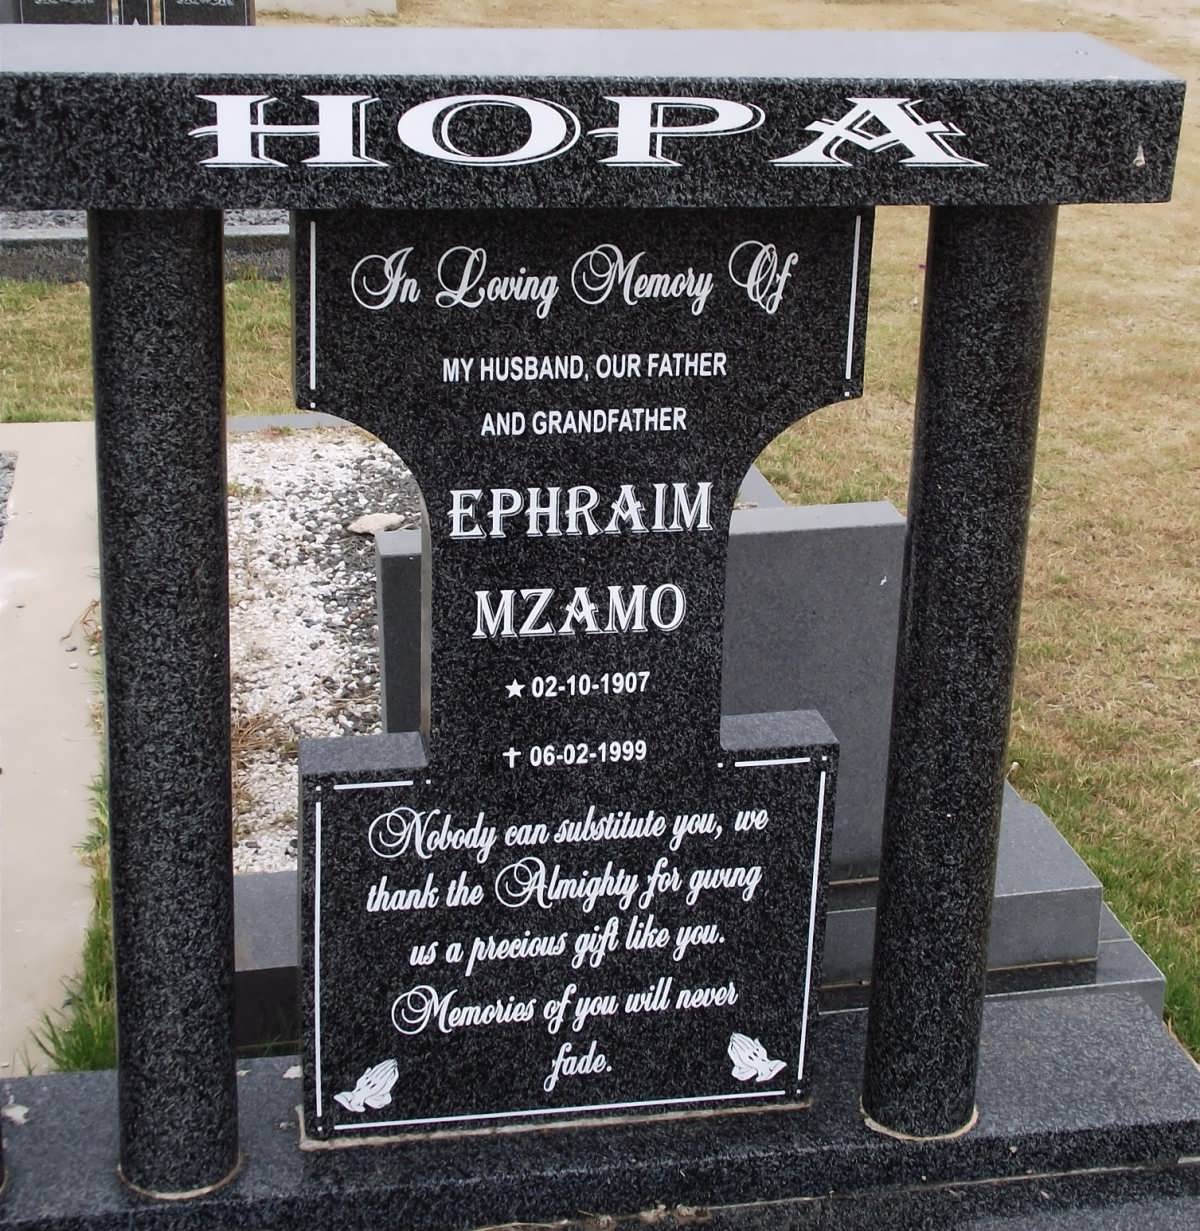 HOPA Ephraim Mzamo 1907-1999